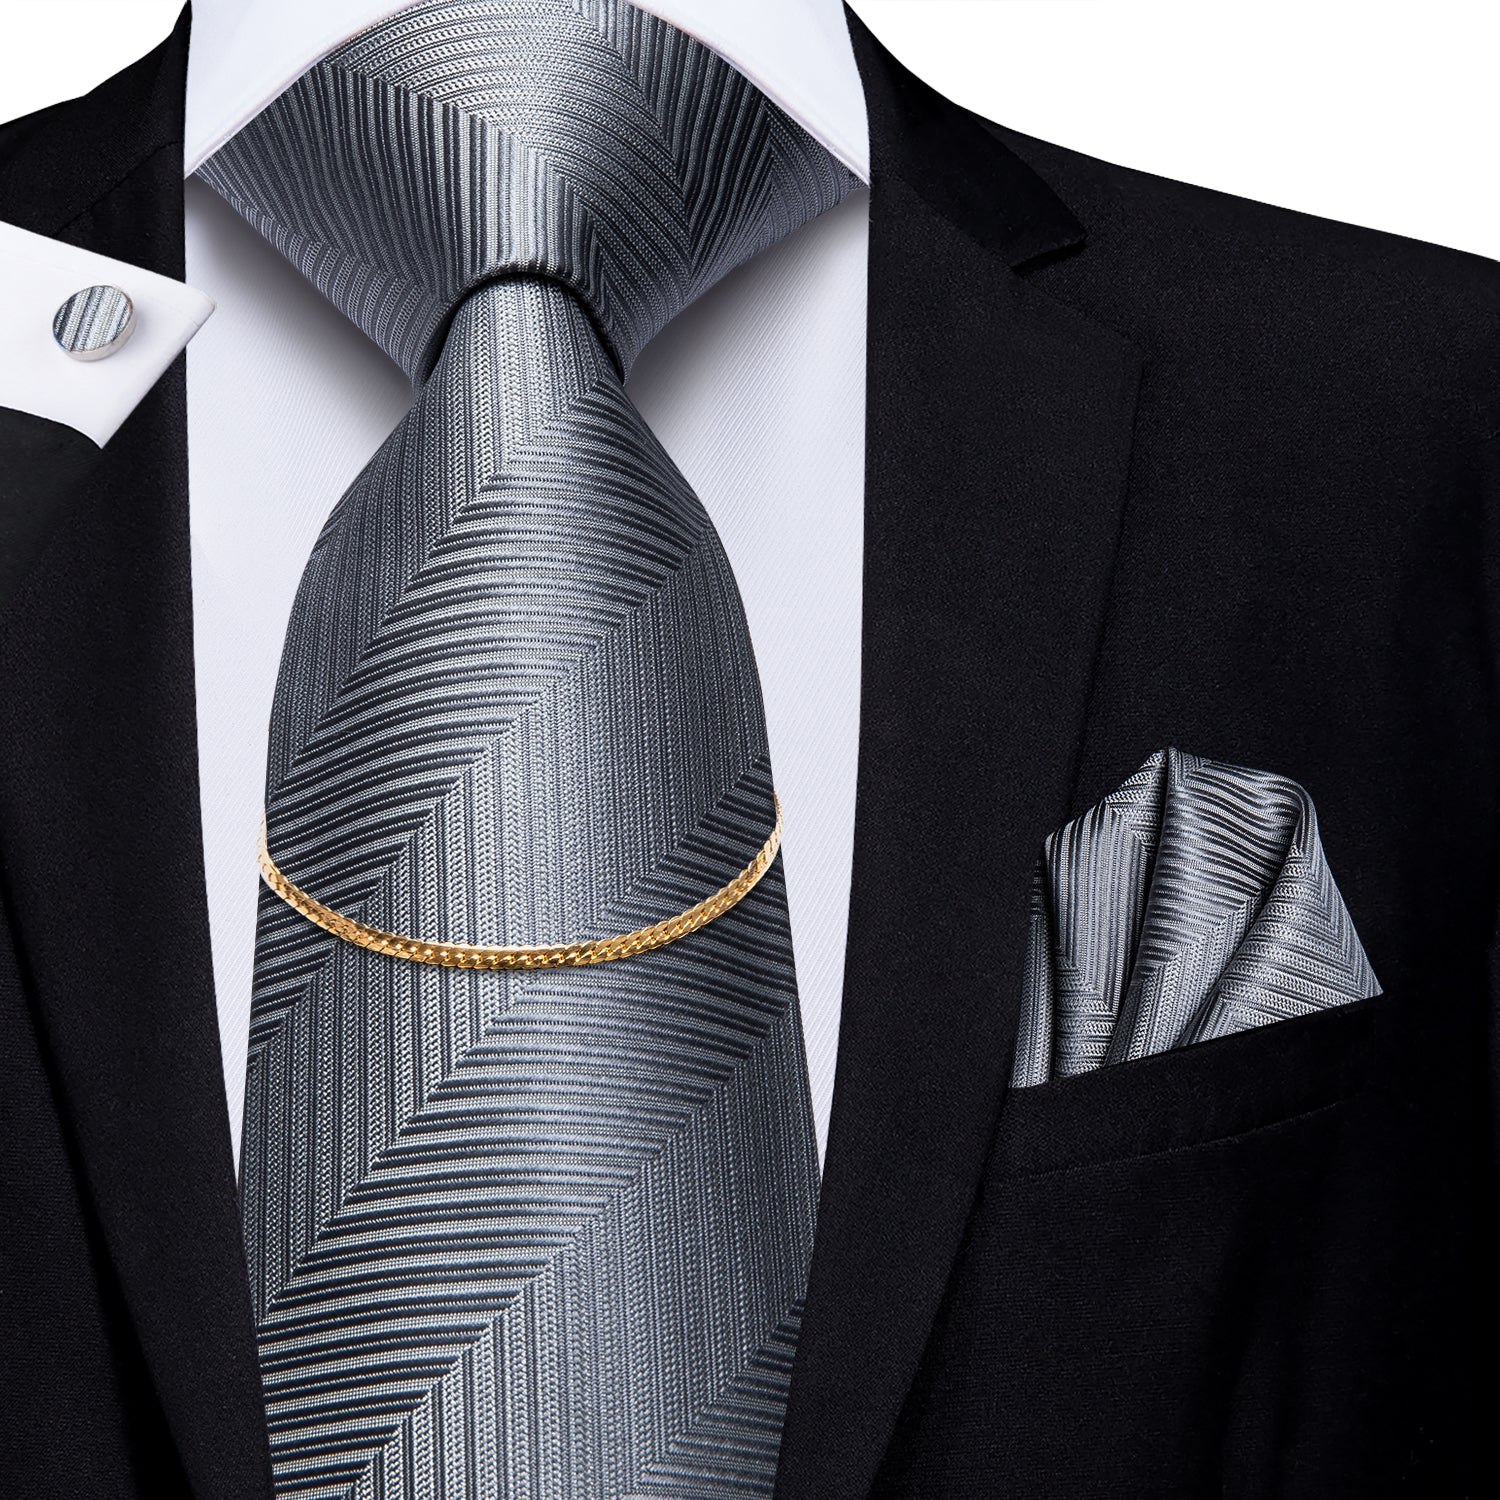 Essential Grey Striped Tie Pocket Square Cufflinks Set With Golden Chain